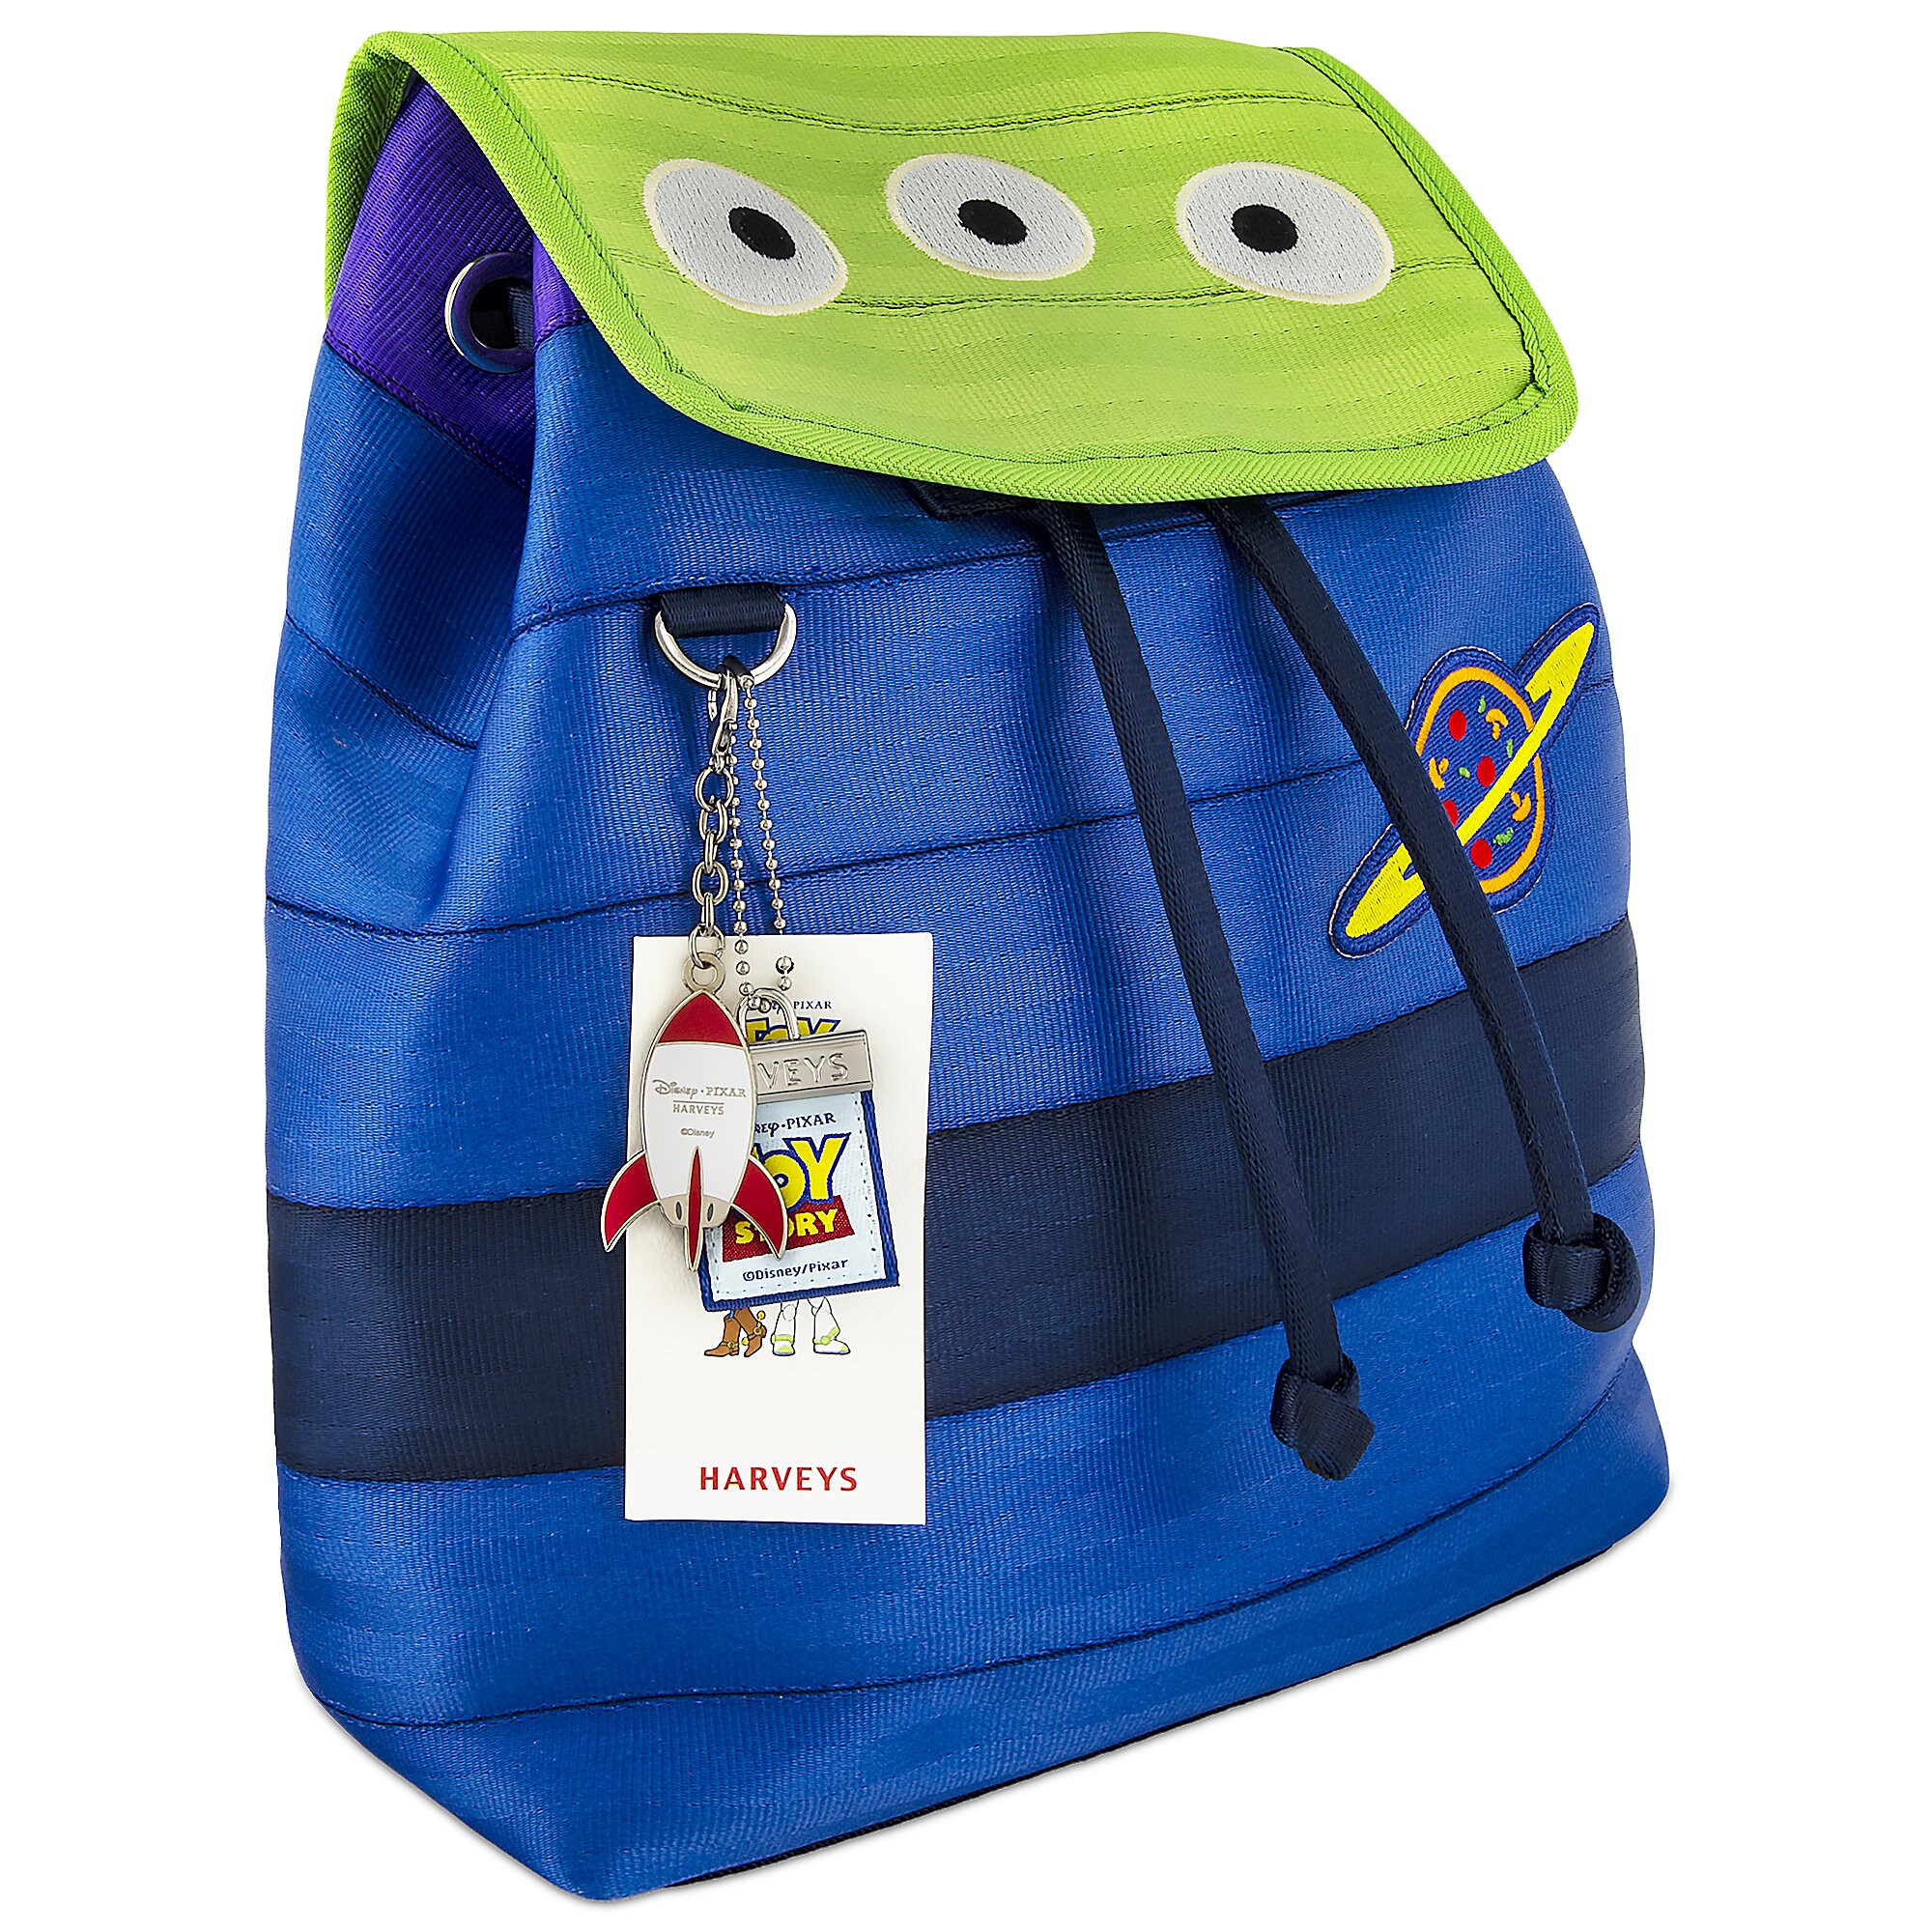 Toy Story Alien Backpack by Harveys